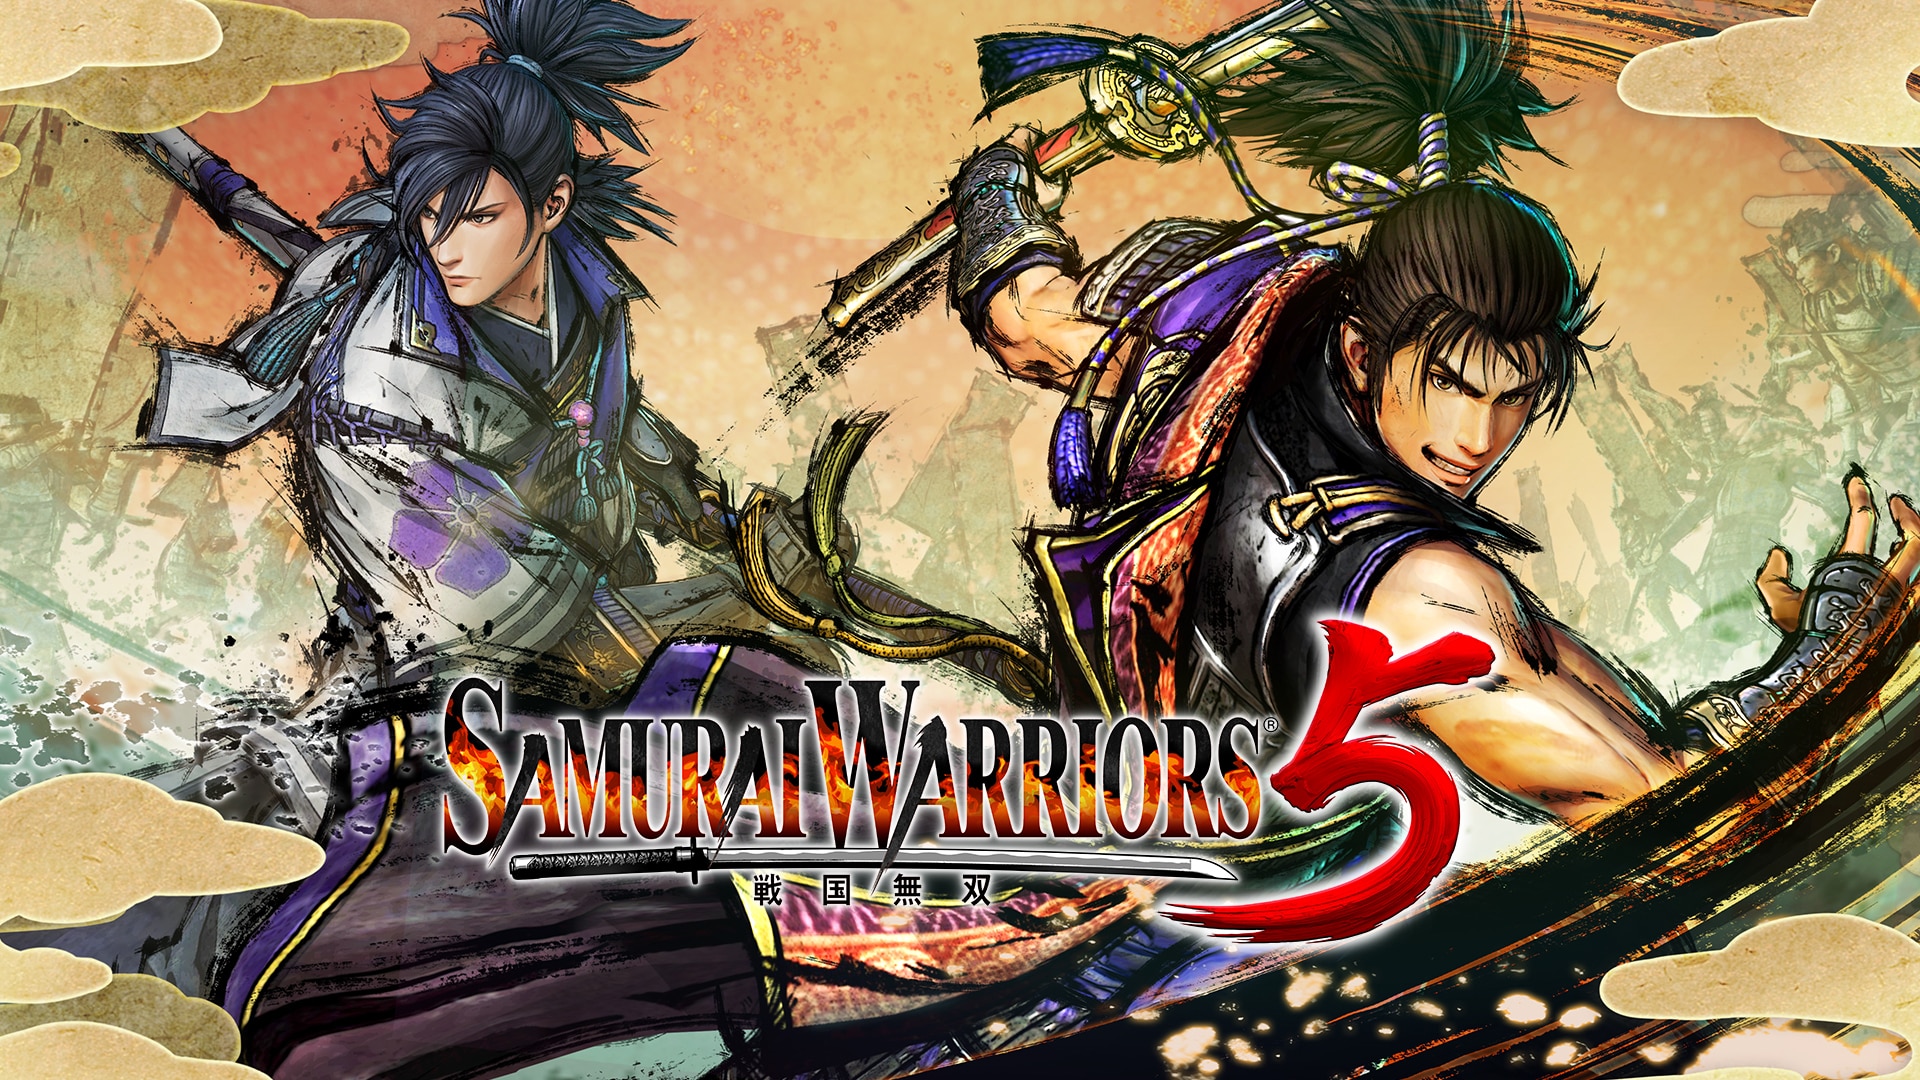 Samurai Warriors 5: dettagli sui protagonisti 4